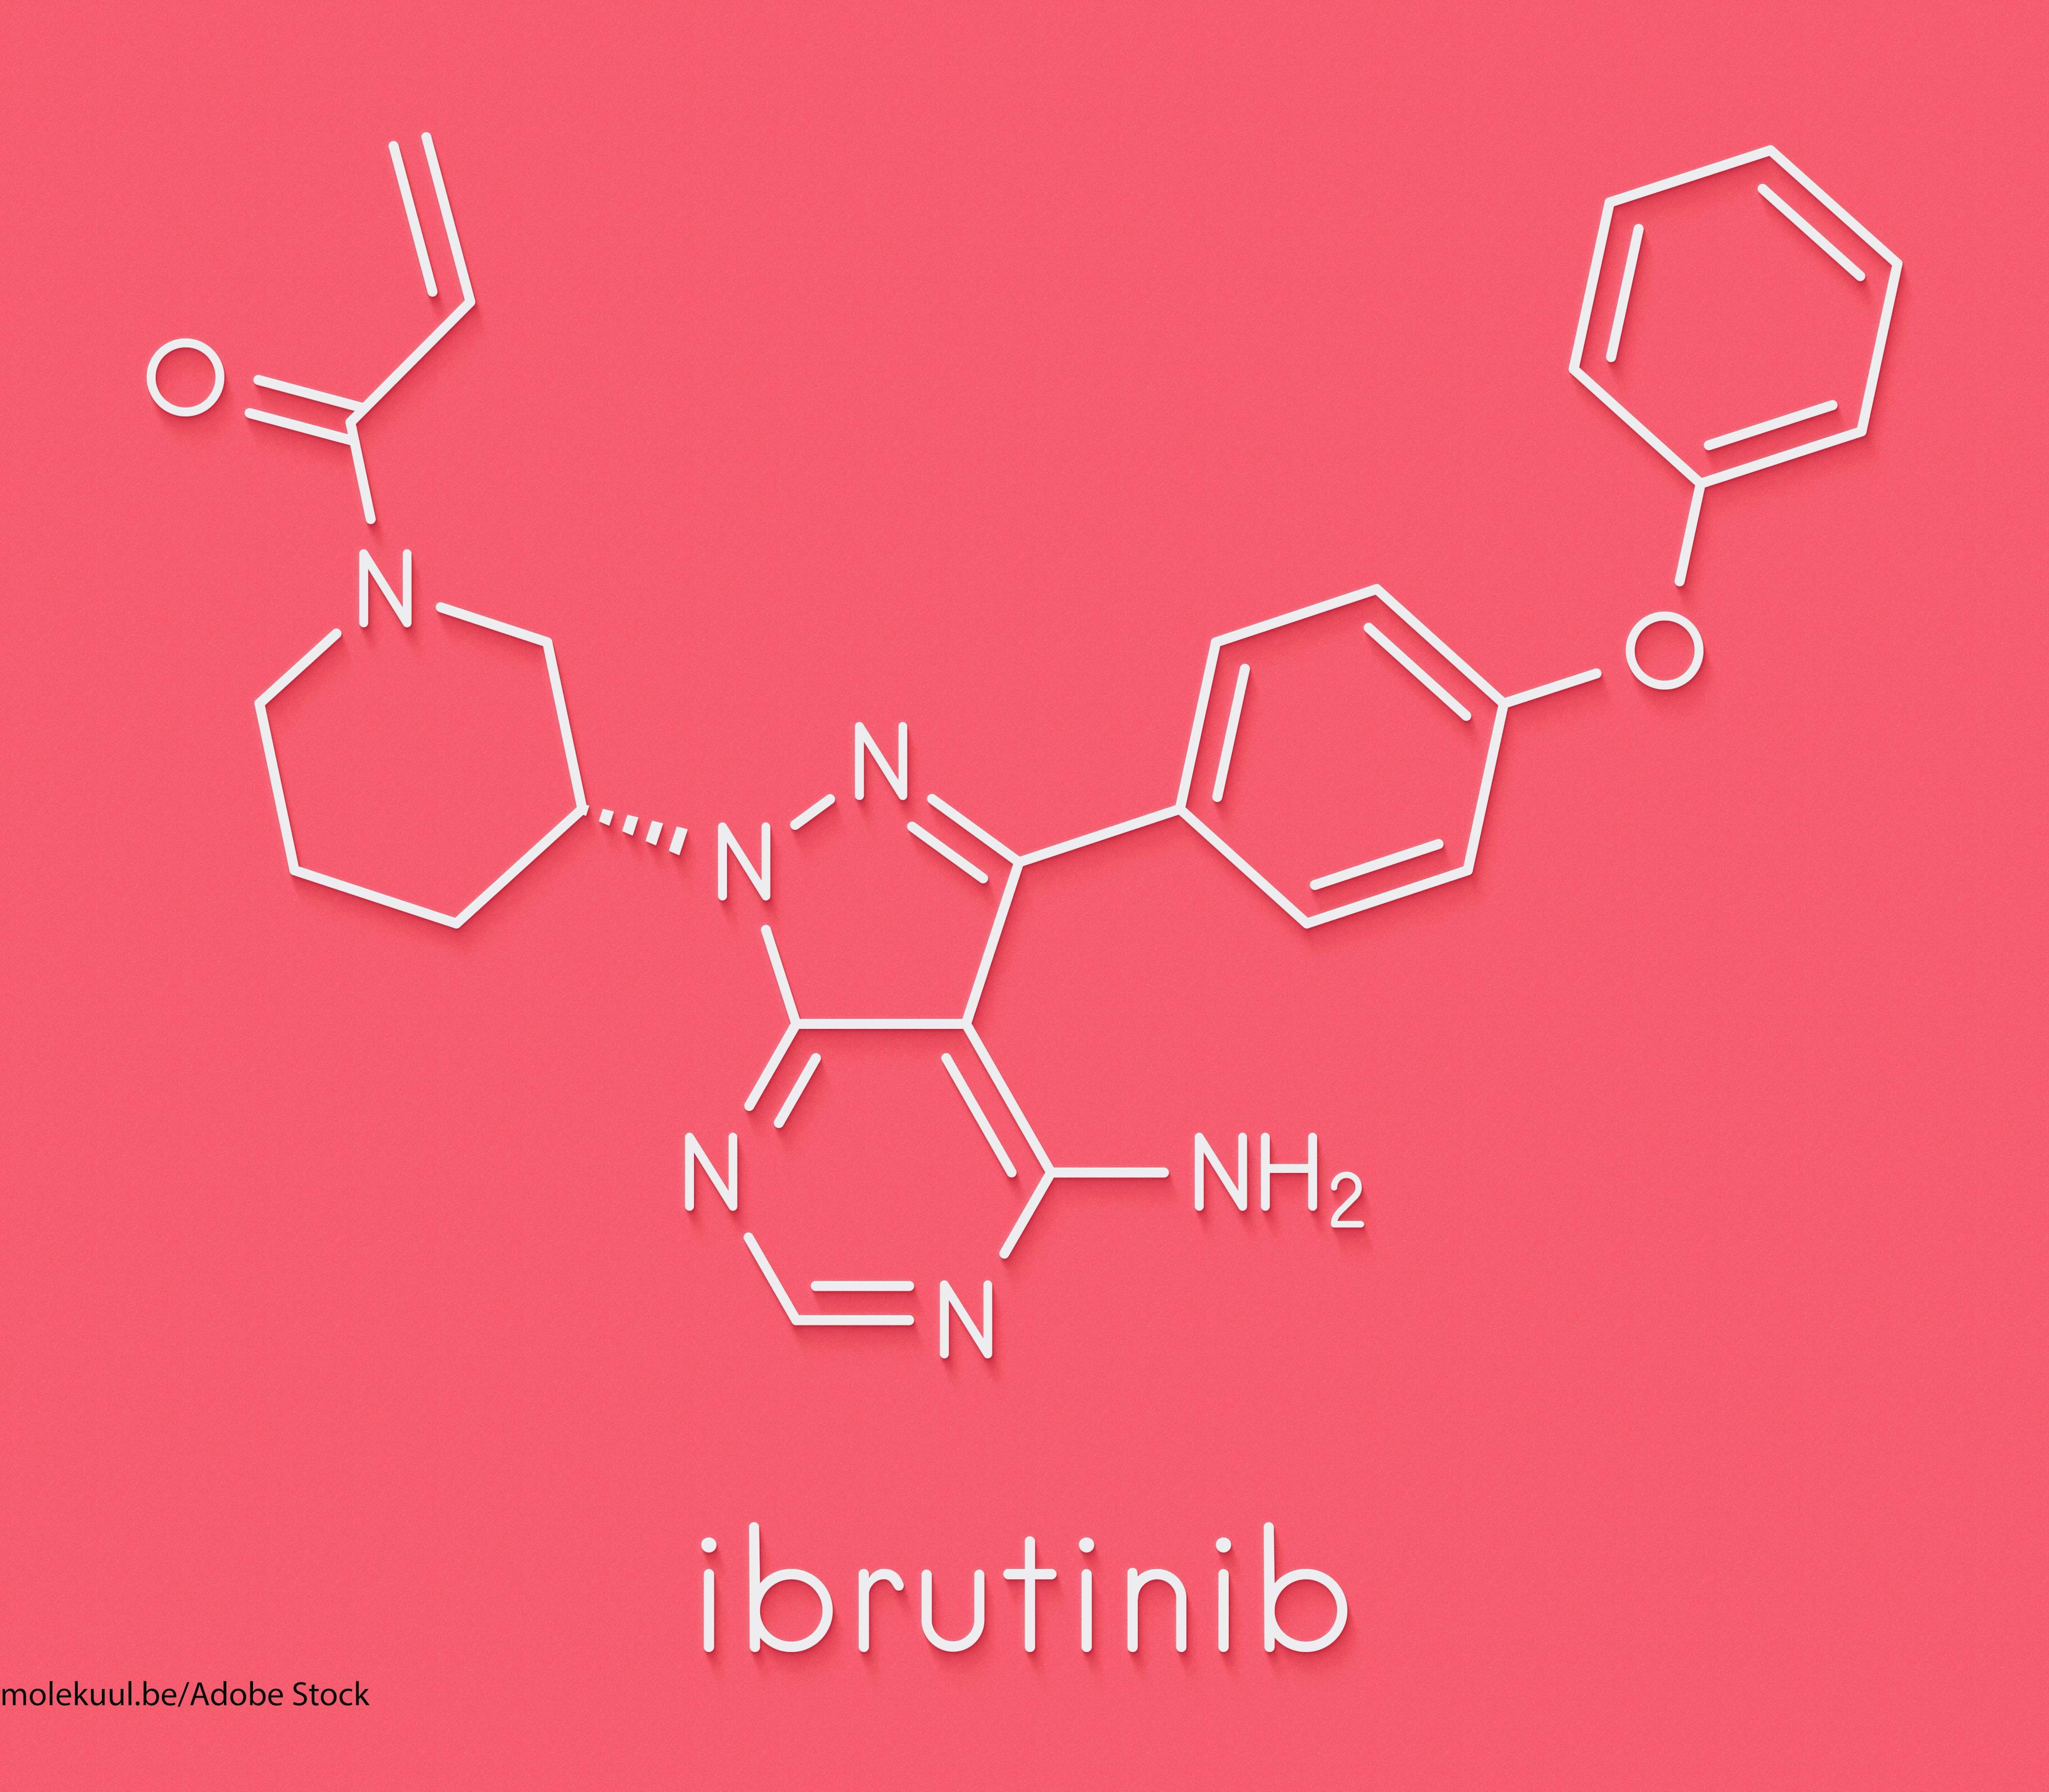 Follow-Up Investigation Highlights Need to Better Understand Ibrutinib-Associated Toxicities